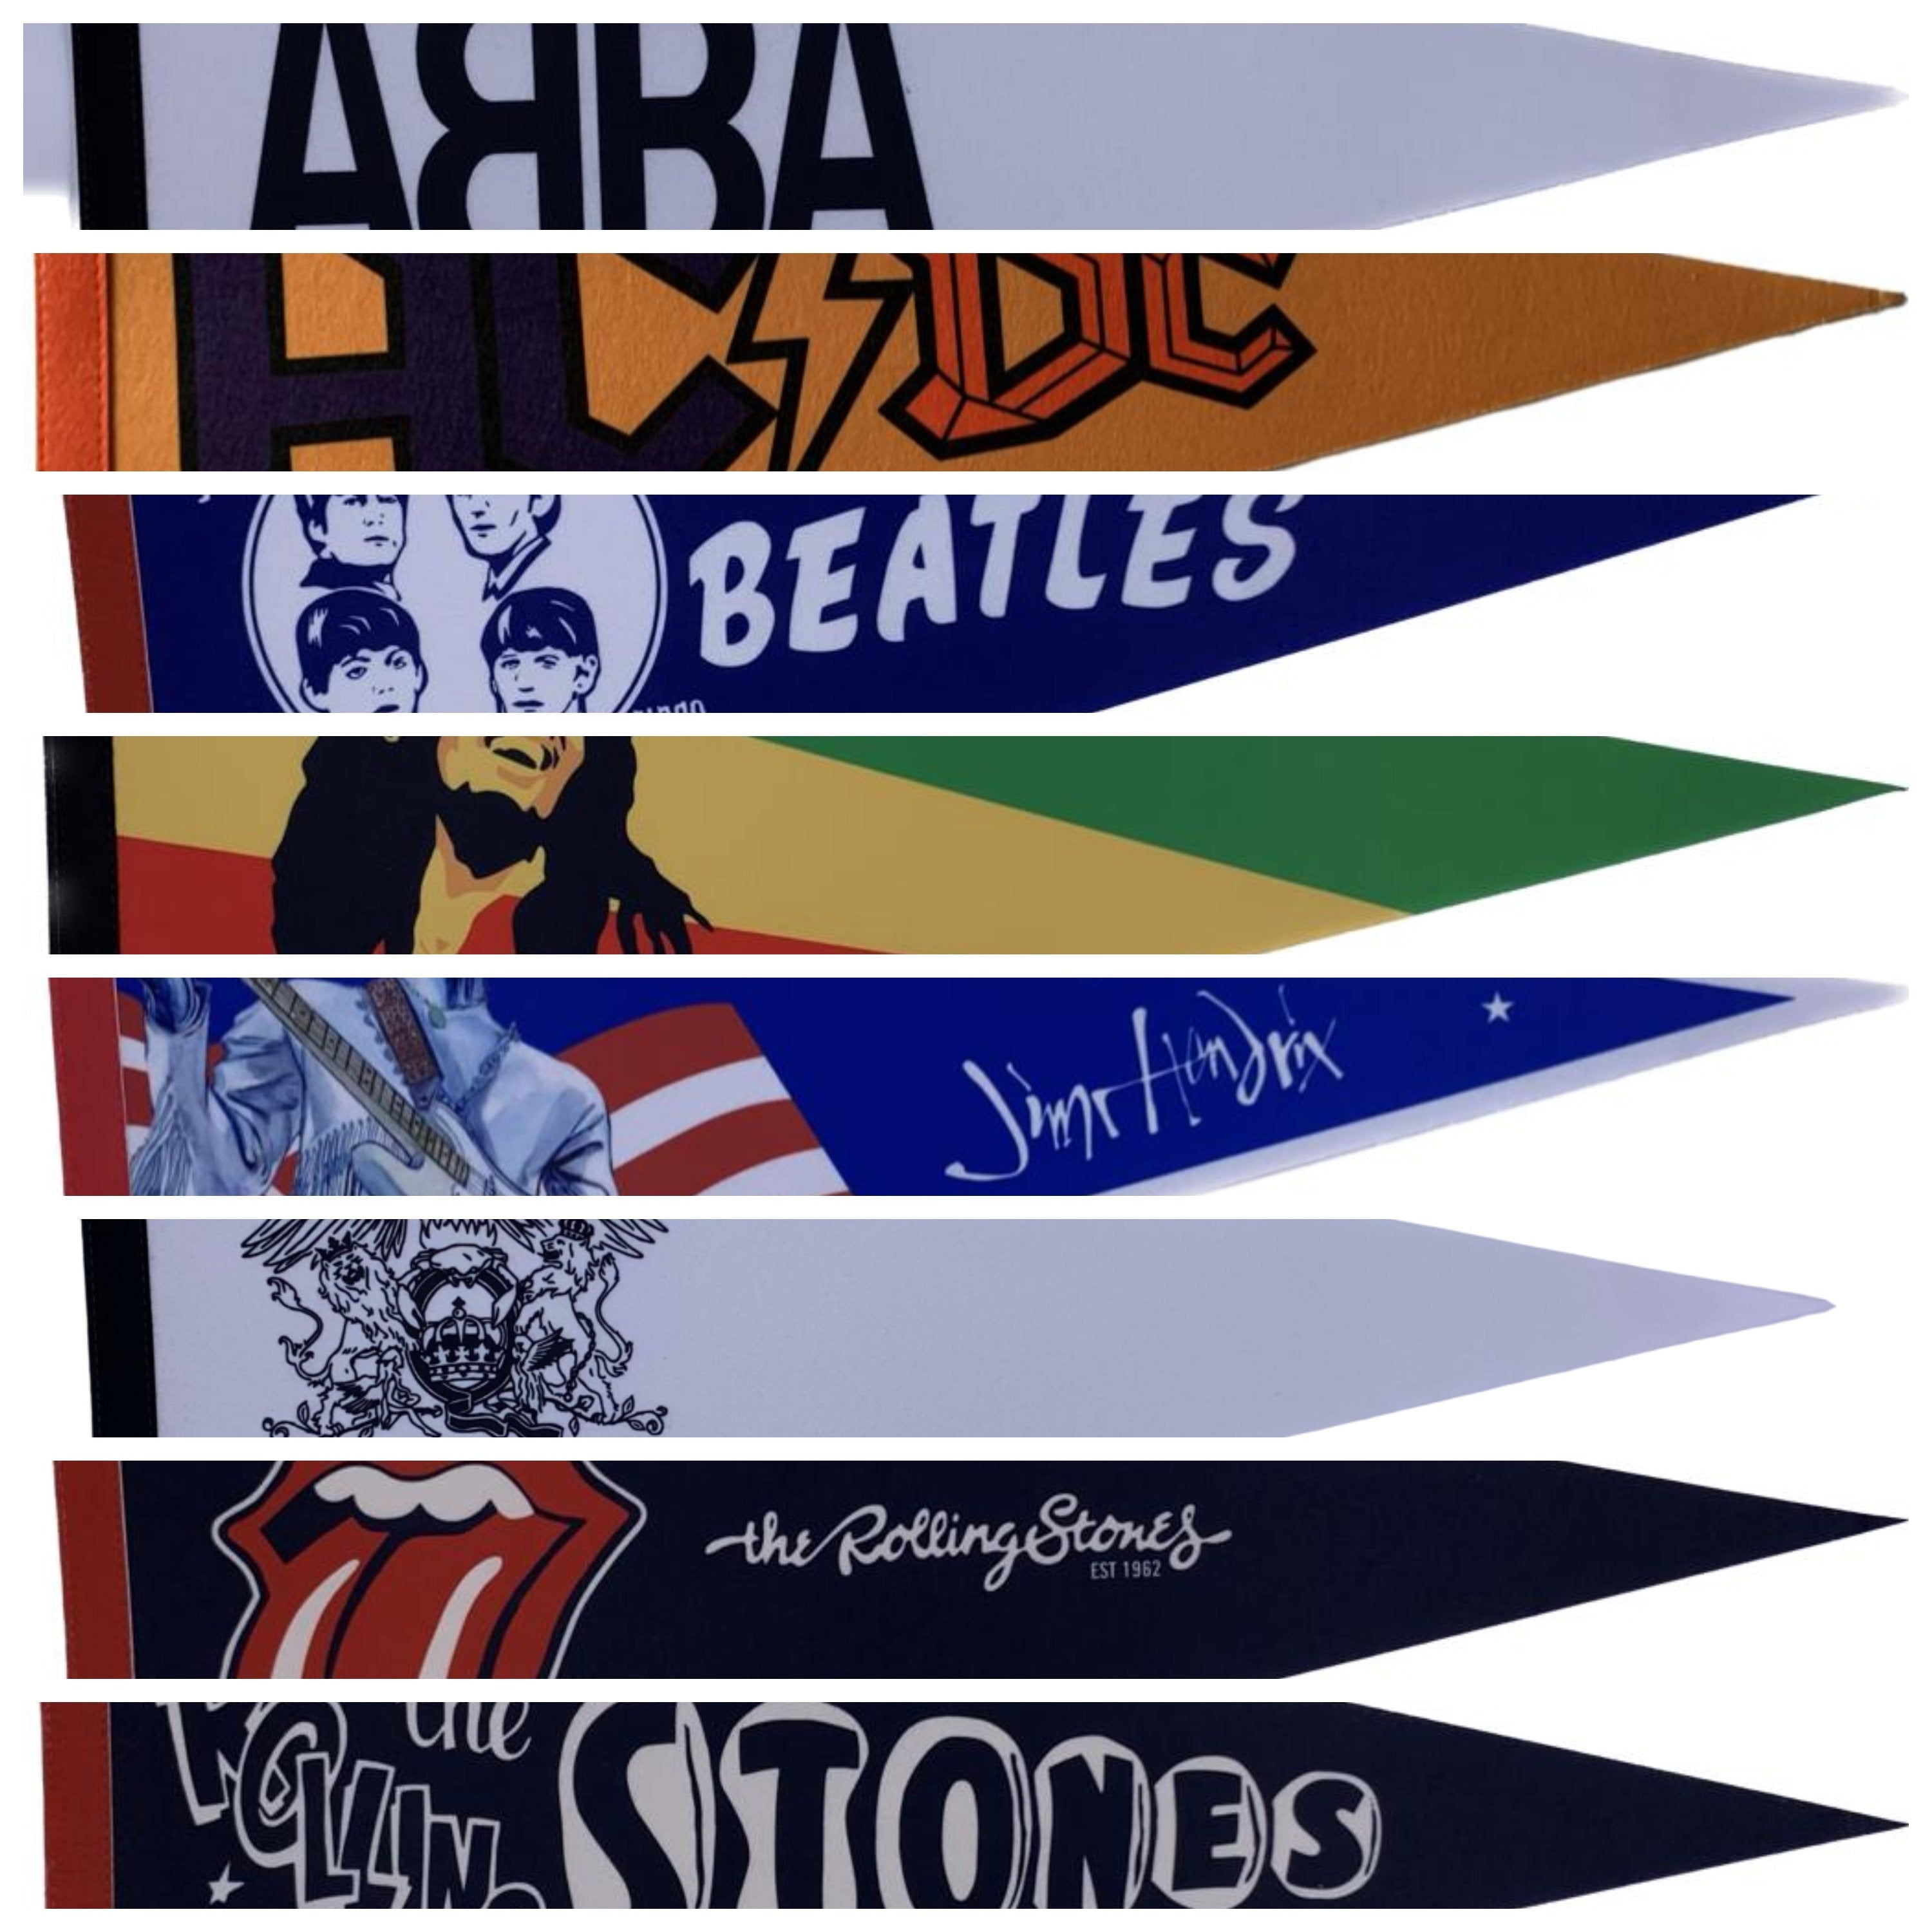 The Beatles UK Music collectibles vintage pennants vaantje vlaggetje vlag vaantje fanion pennant flag rock music finds wall decor beatles - Beatles Hair